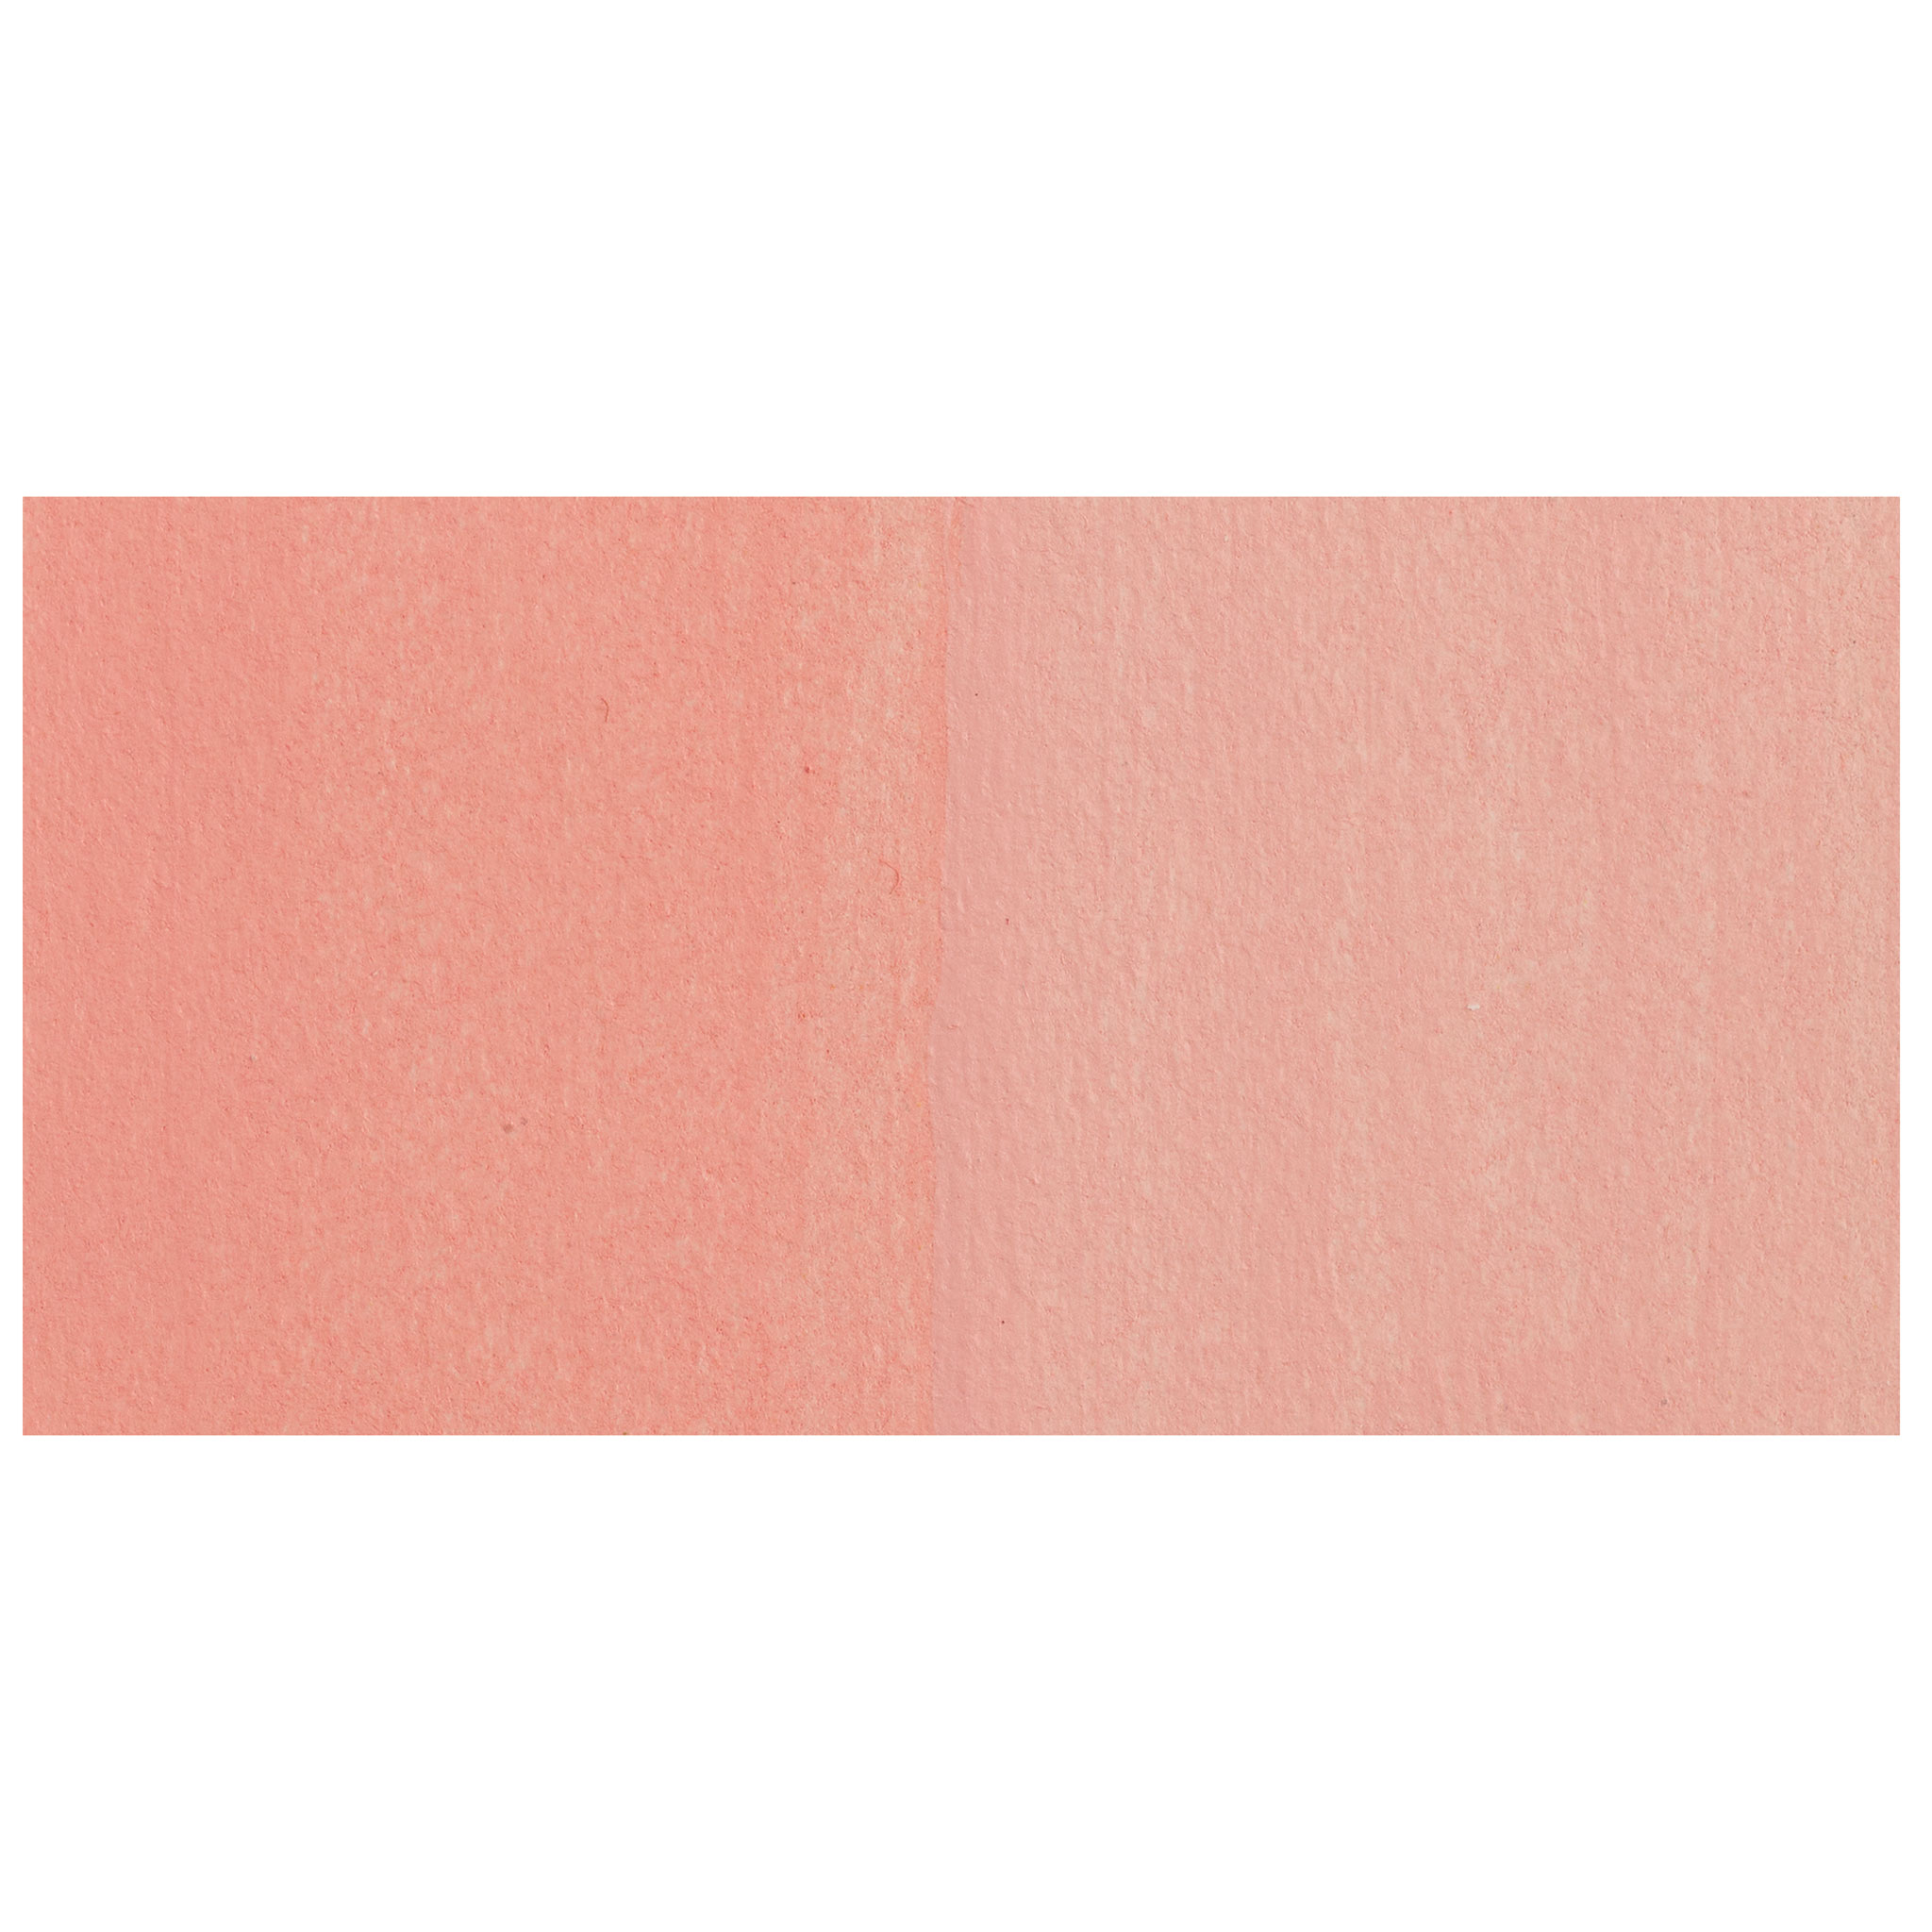 Liquitex Basics Acrylic Fluid Paint - Light Pink, 118 ml